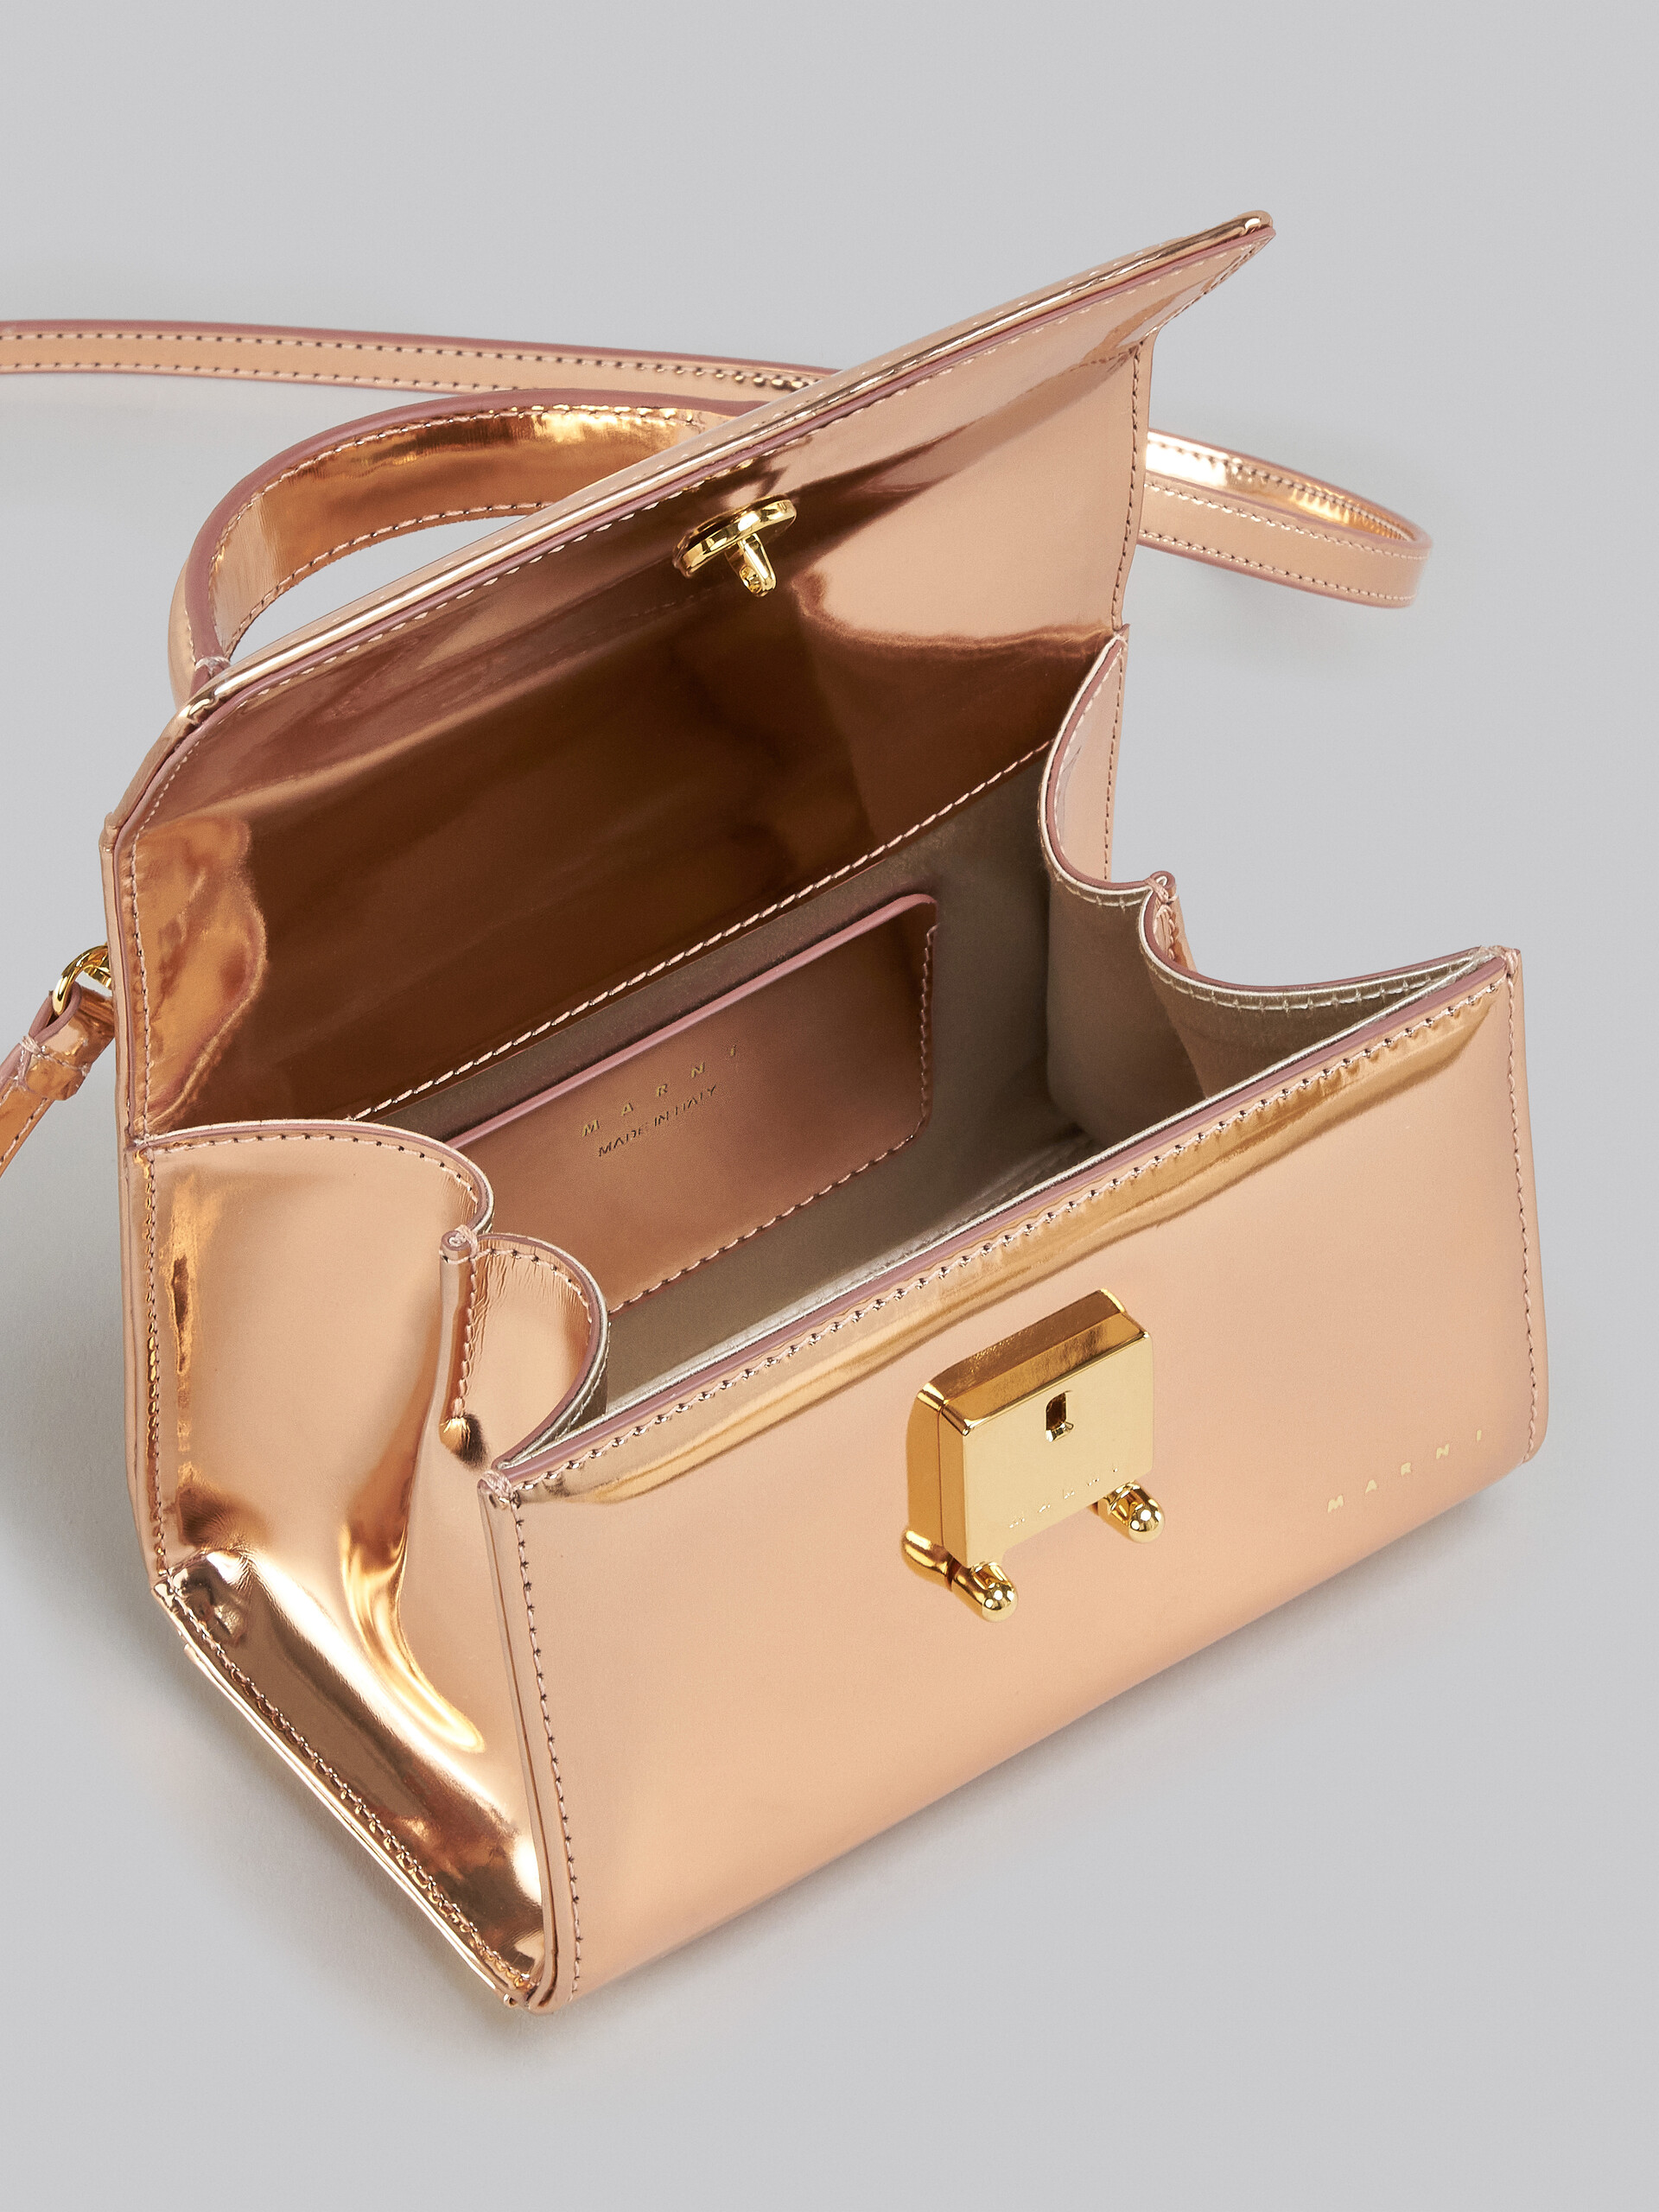 Relativity Mini Bag in rose gold mirrored leather - Handbags - Image 4